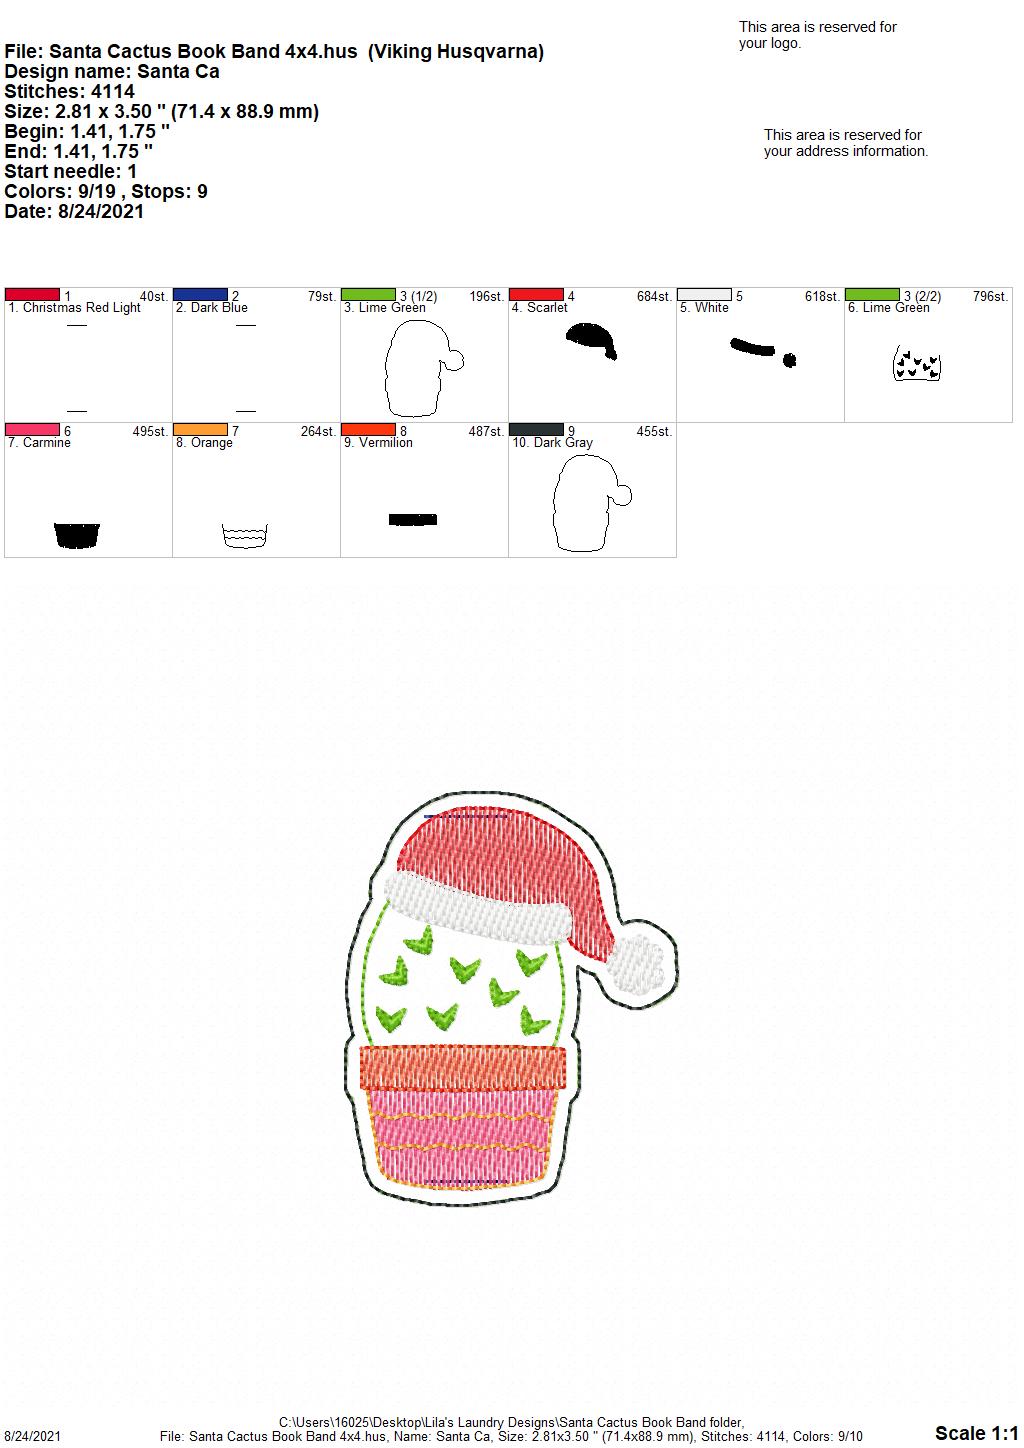 Santa Cactus Book Band - Embroidery Design, Digital File